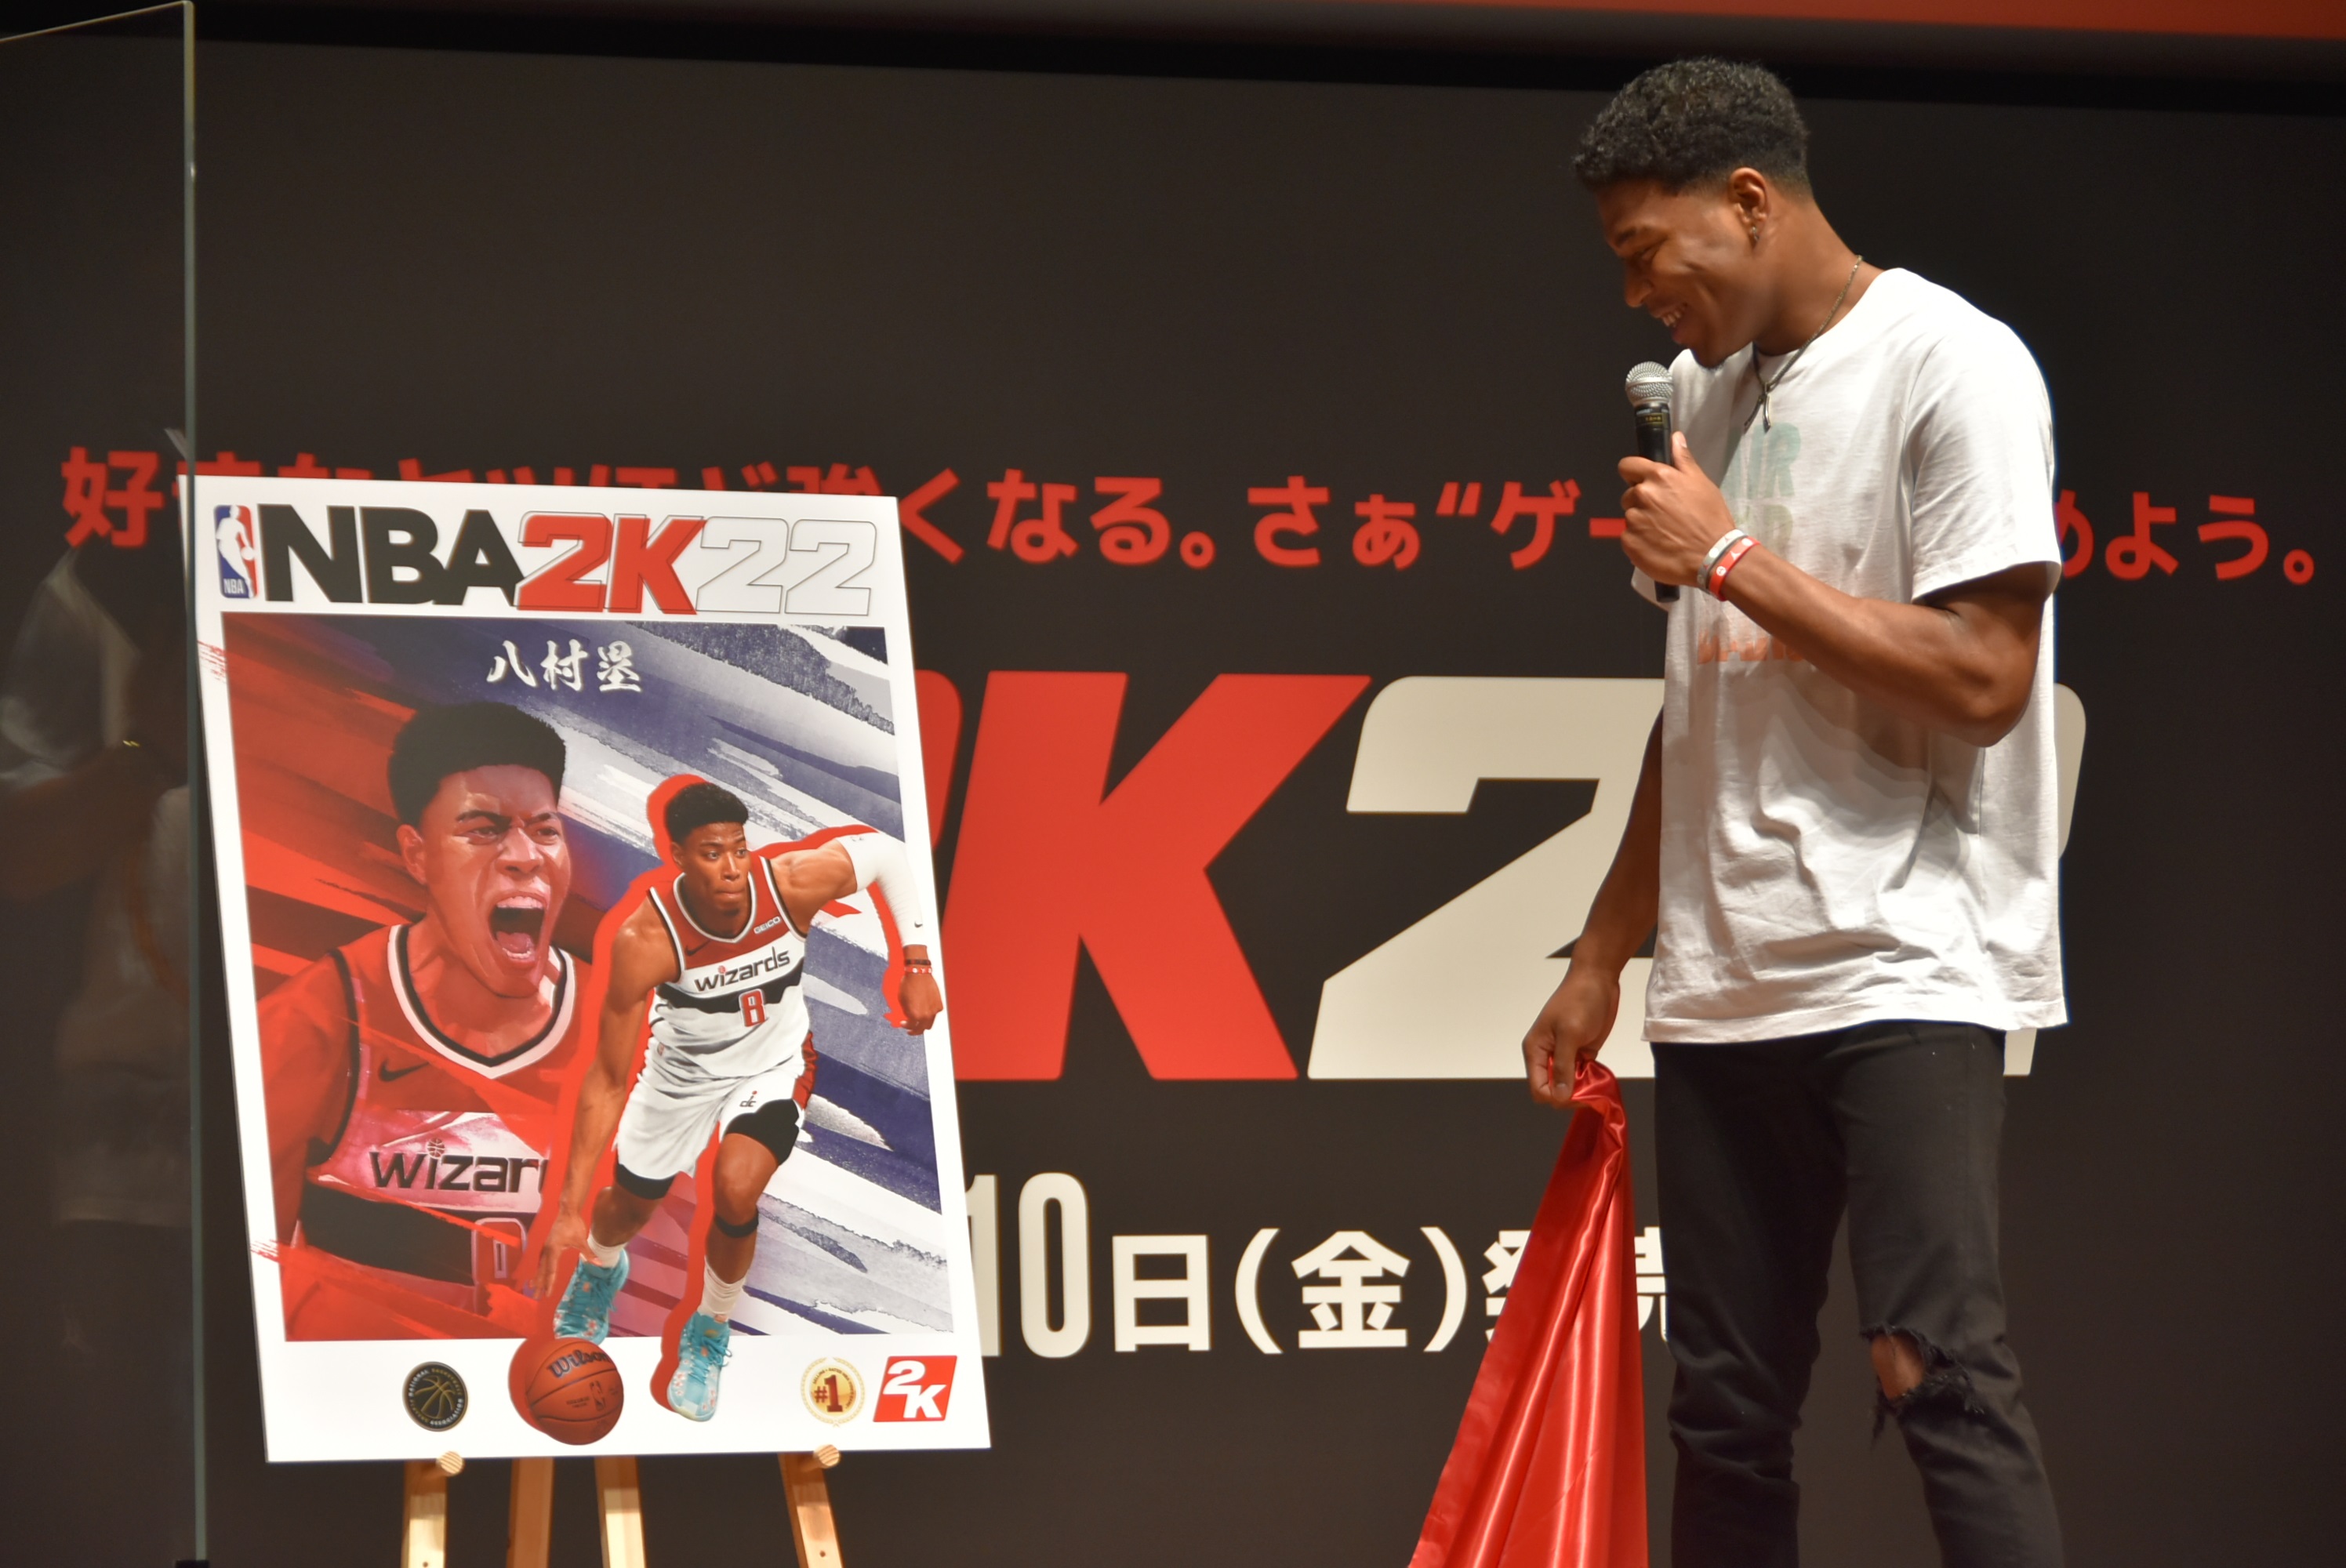 Hachimura Cover Athlete for Japanese Version of NBA 2K22 Japanbased Nintendo